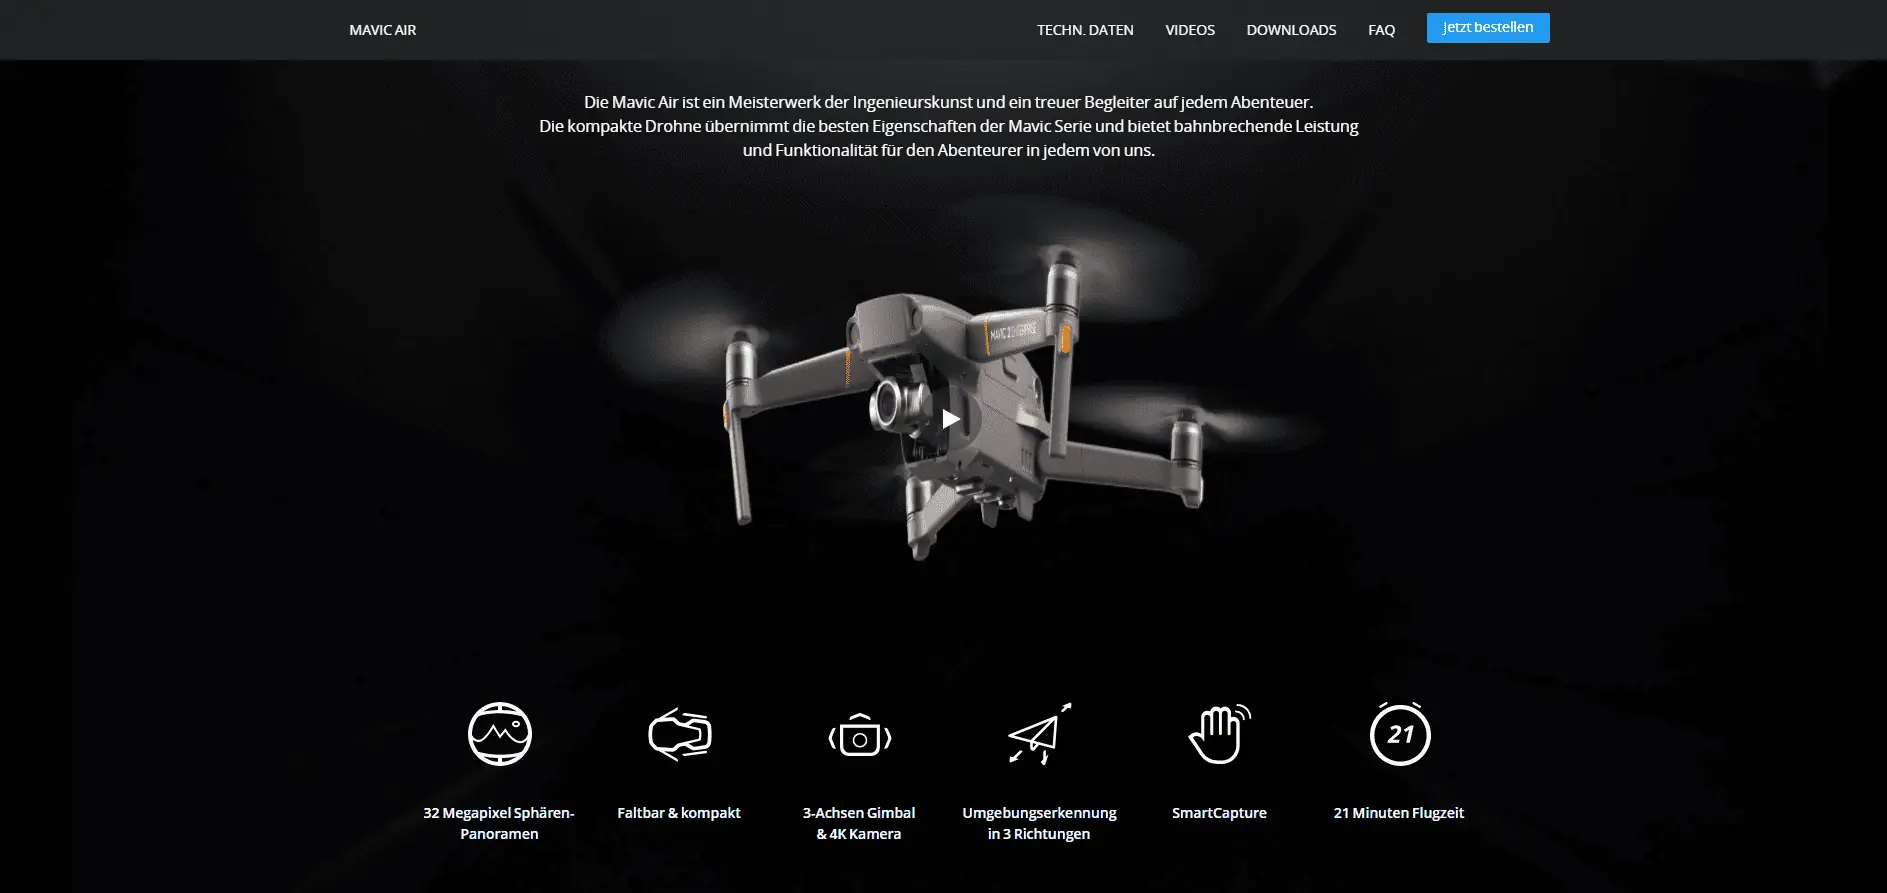 Nuova fotografia del drone Dji Mavic 2 Enterprise